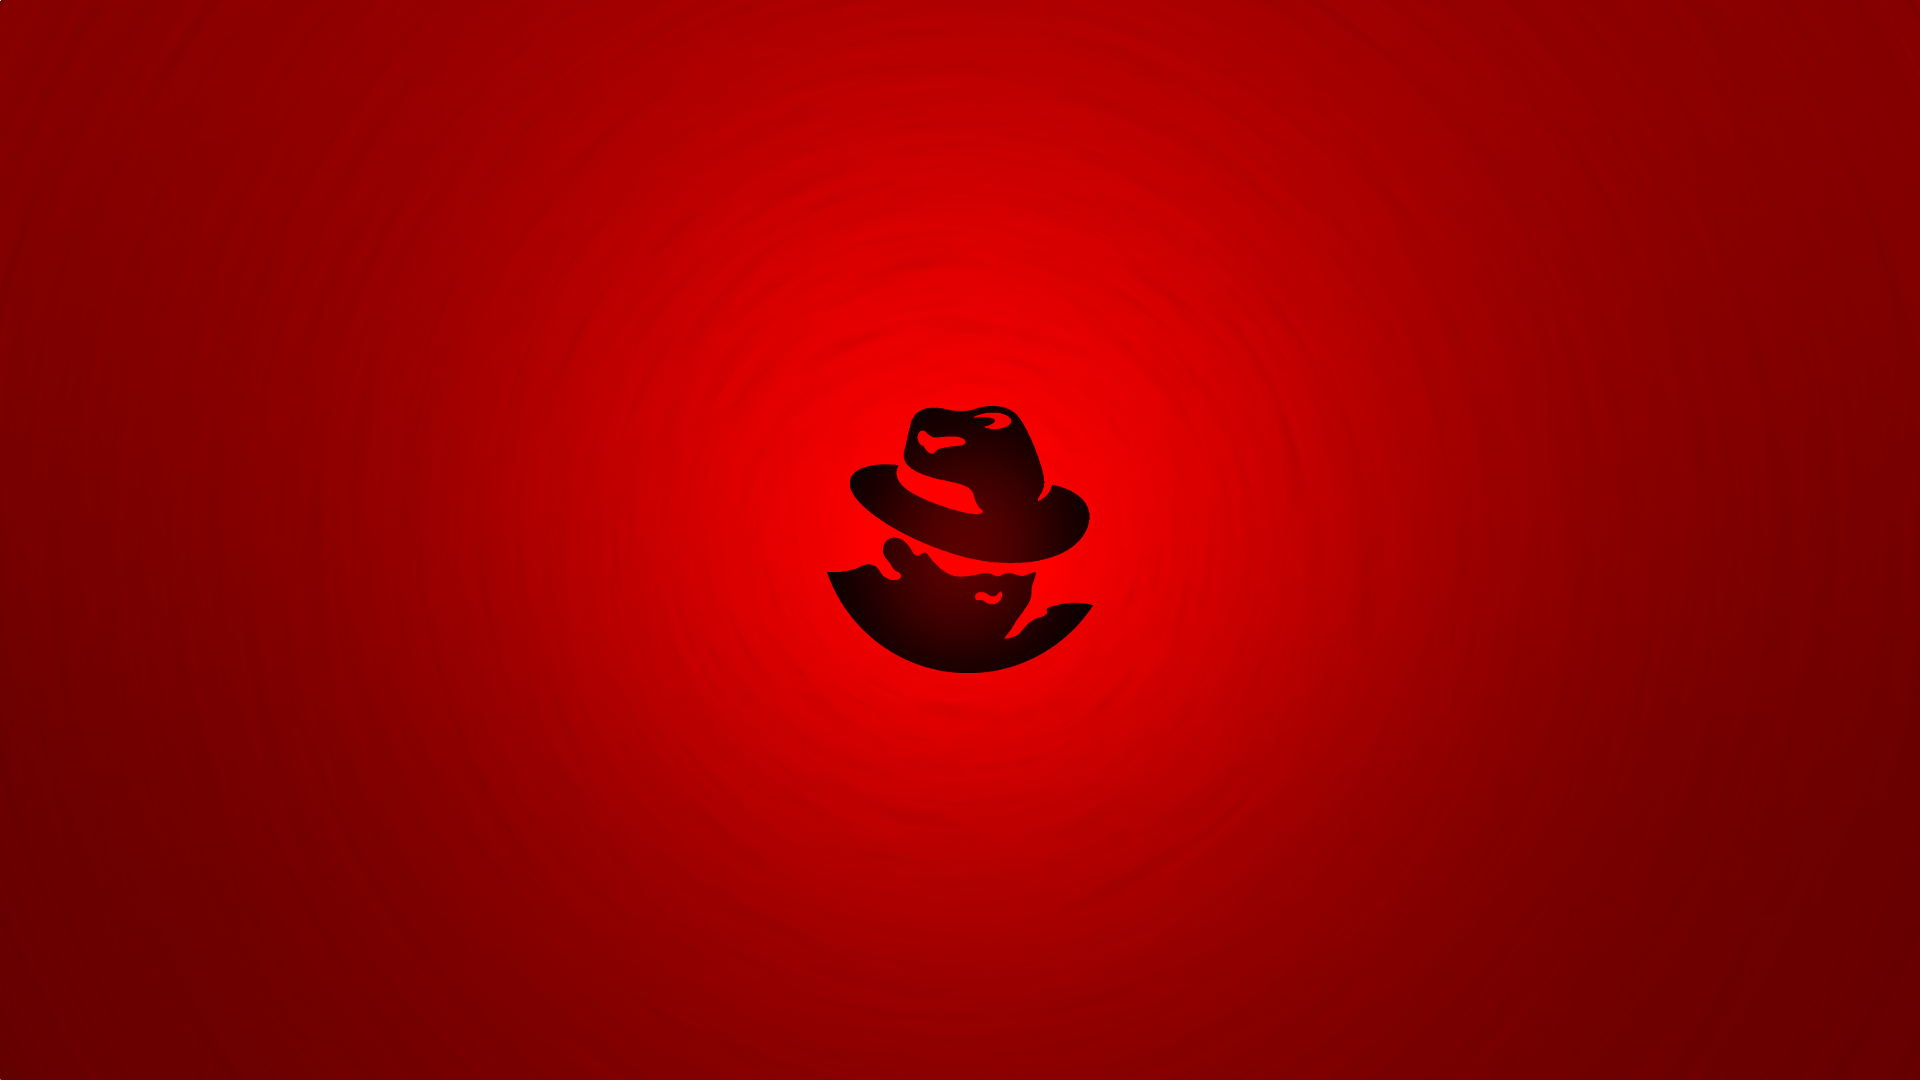 Red hat 8. Редхат линукс. Red hat. Обои Red hat. Rad hat заставка.